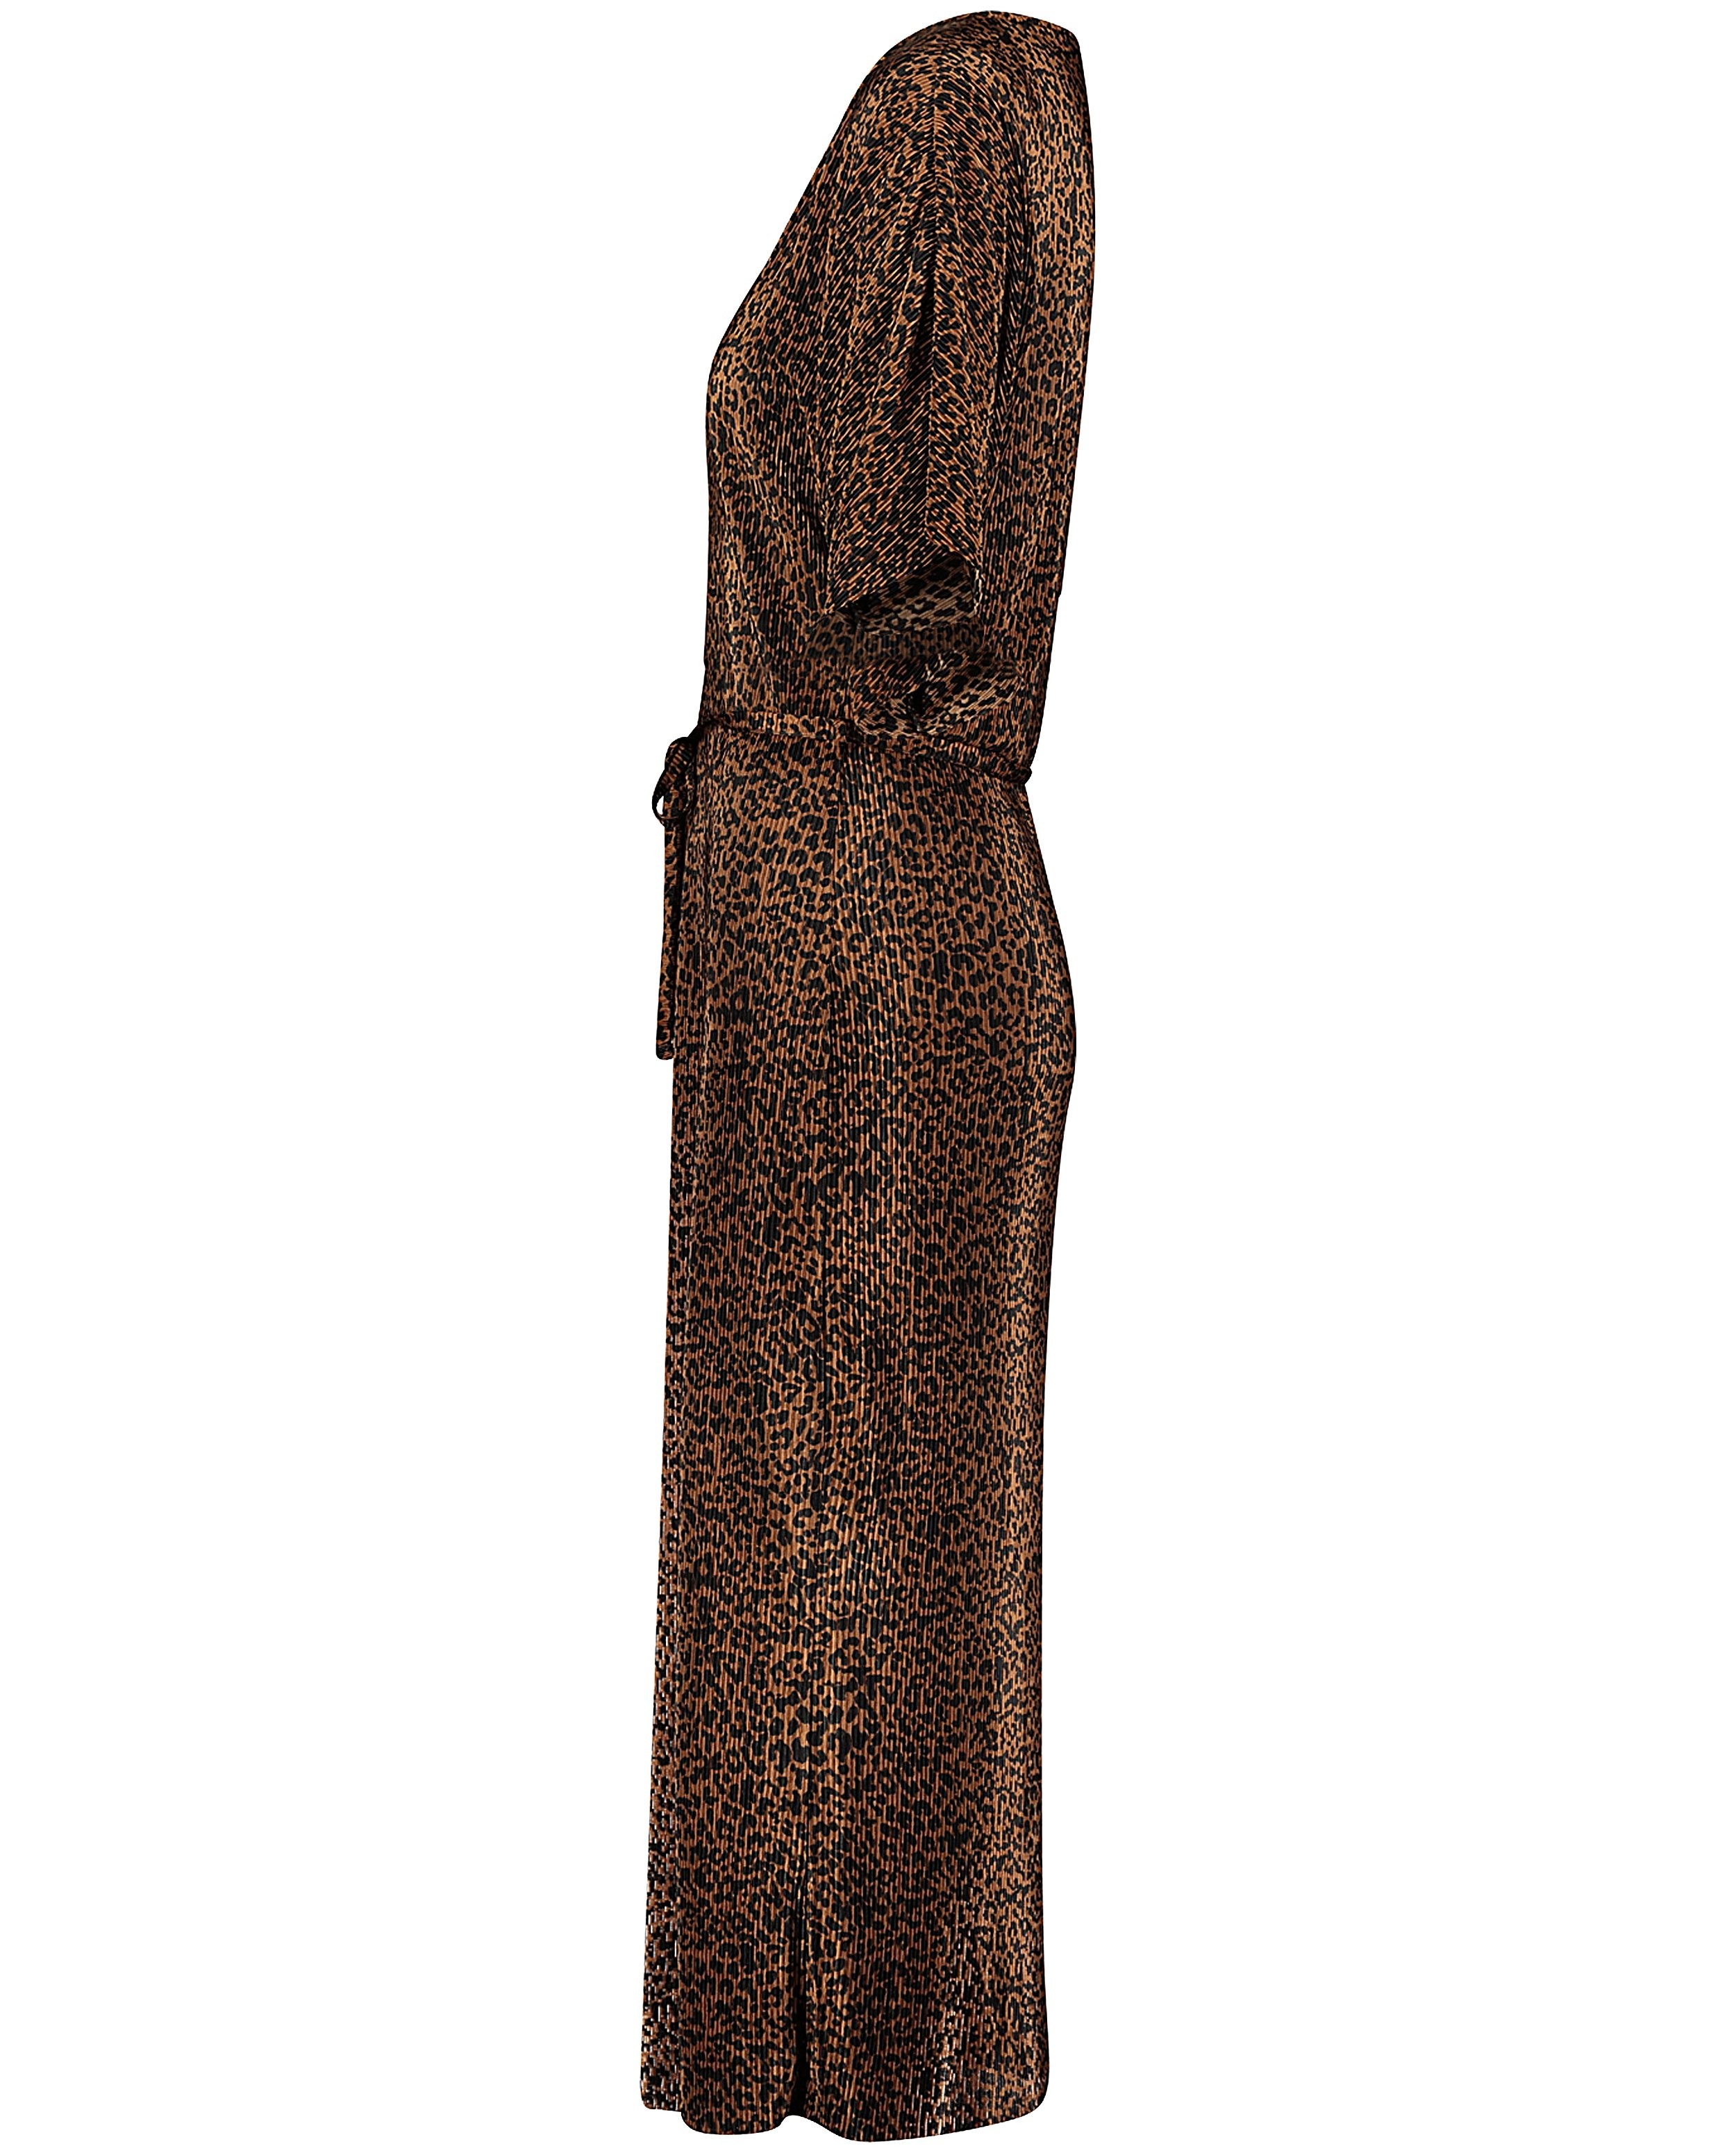 Robes - Robe avec imprimé léopard